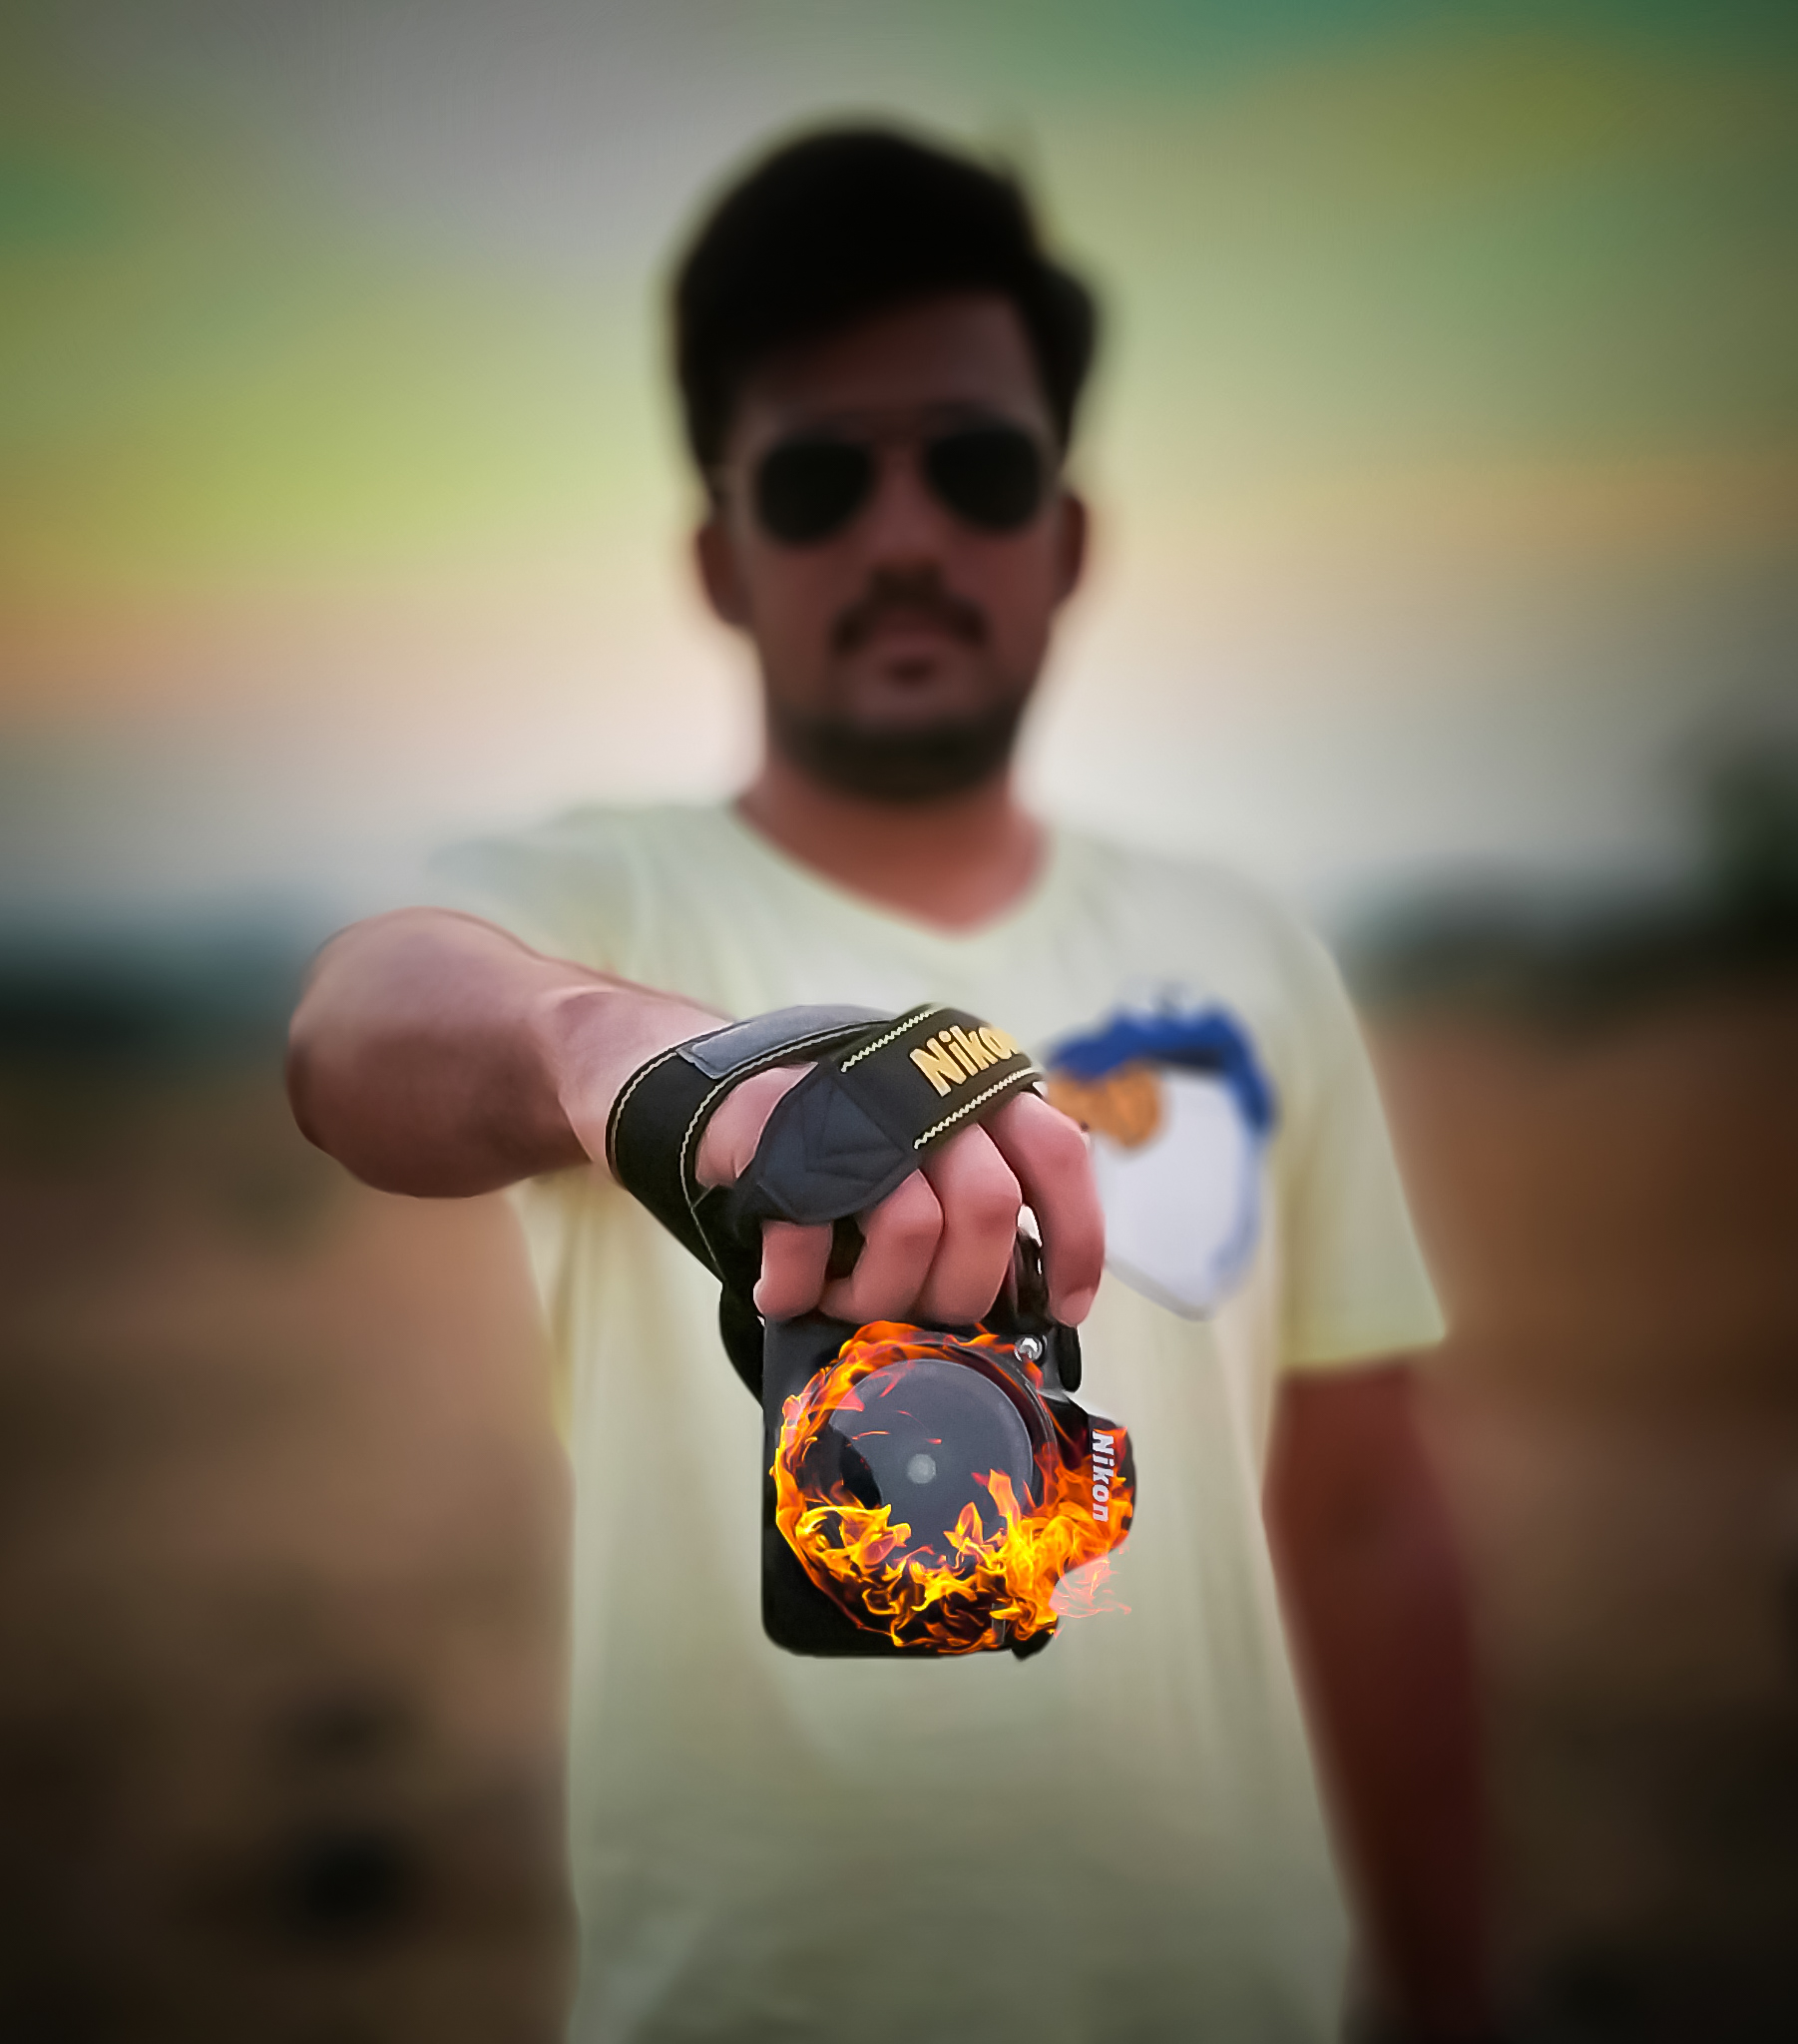 A man showing a burning camera